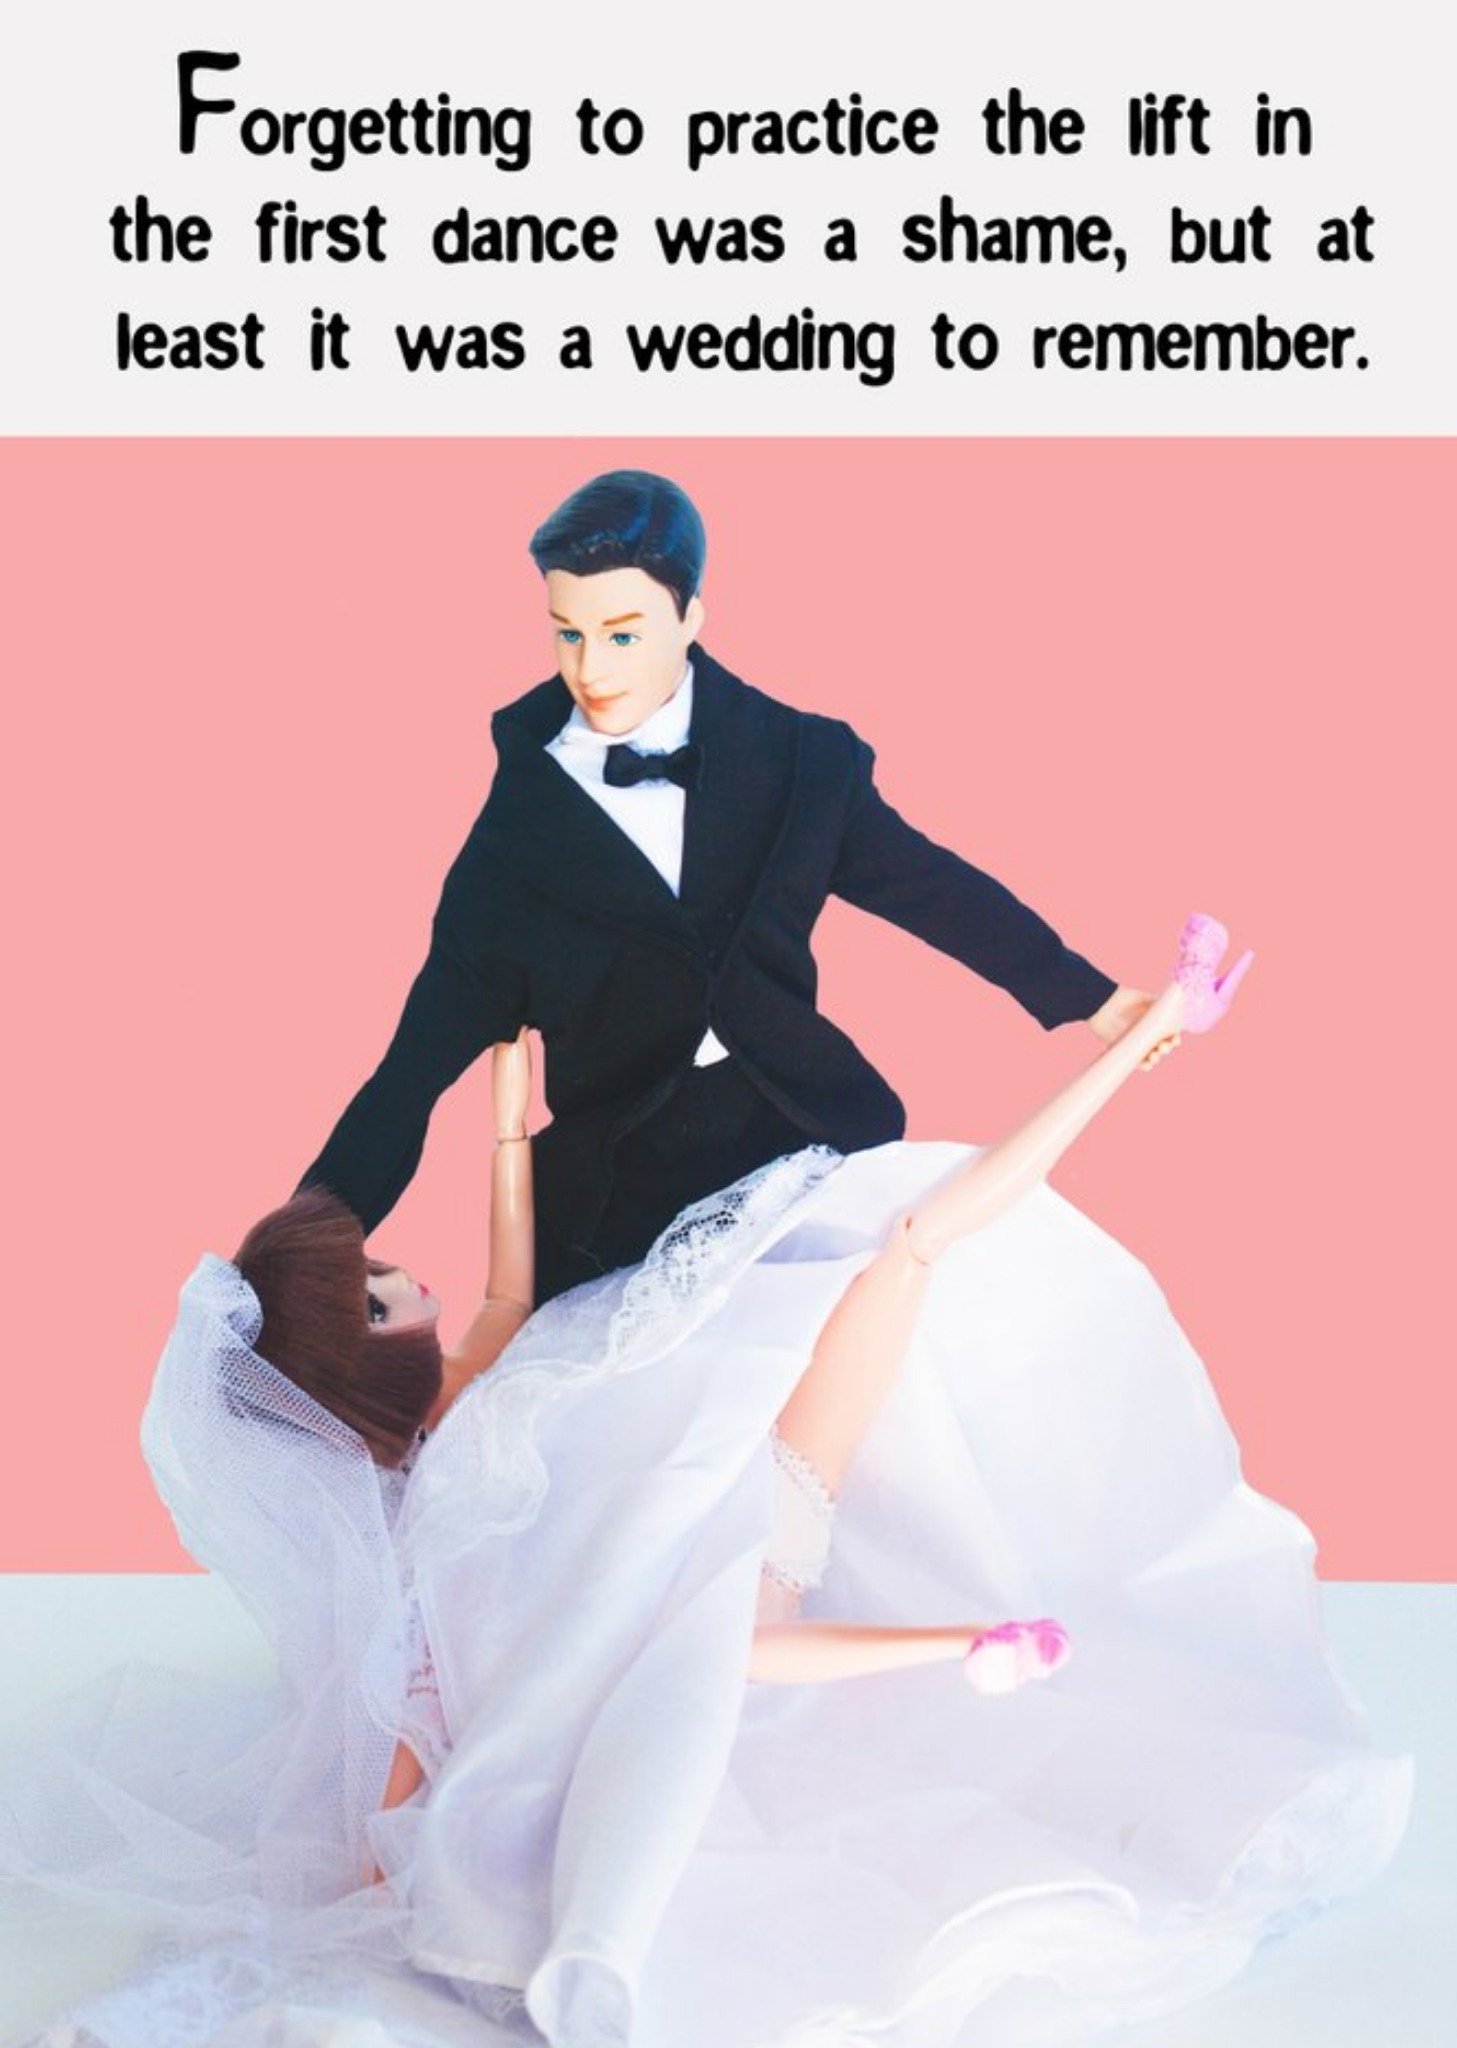 Go La La Photo Humour Male And Female Dolls Wedding Dance Fail Card, Large